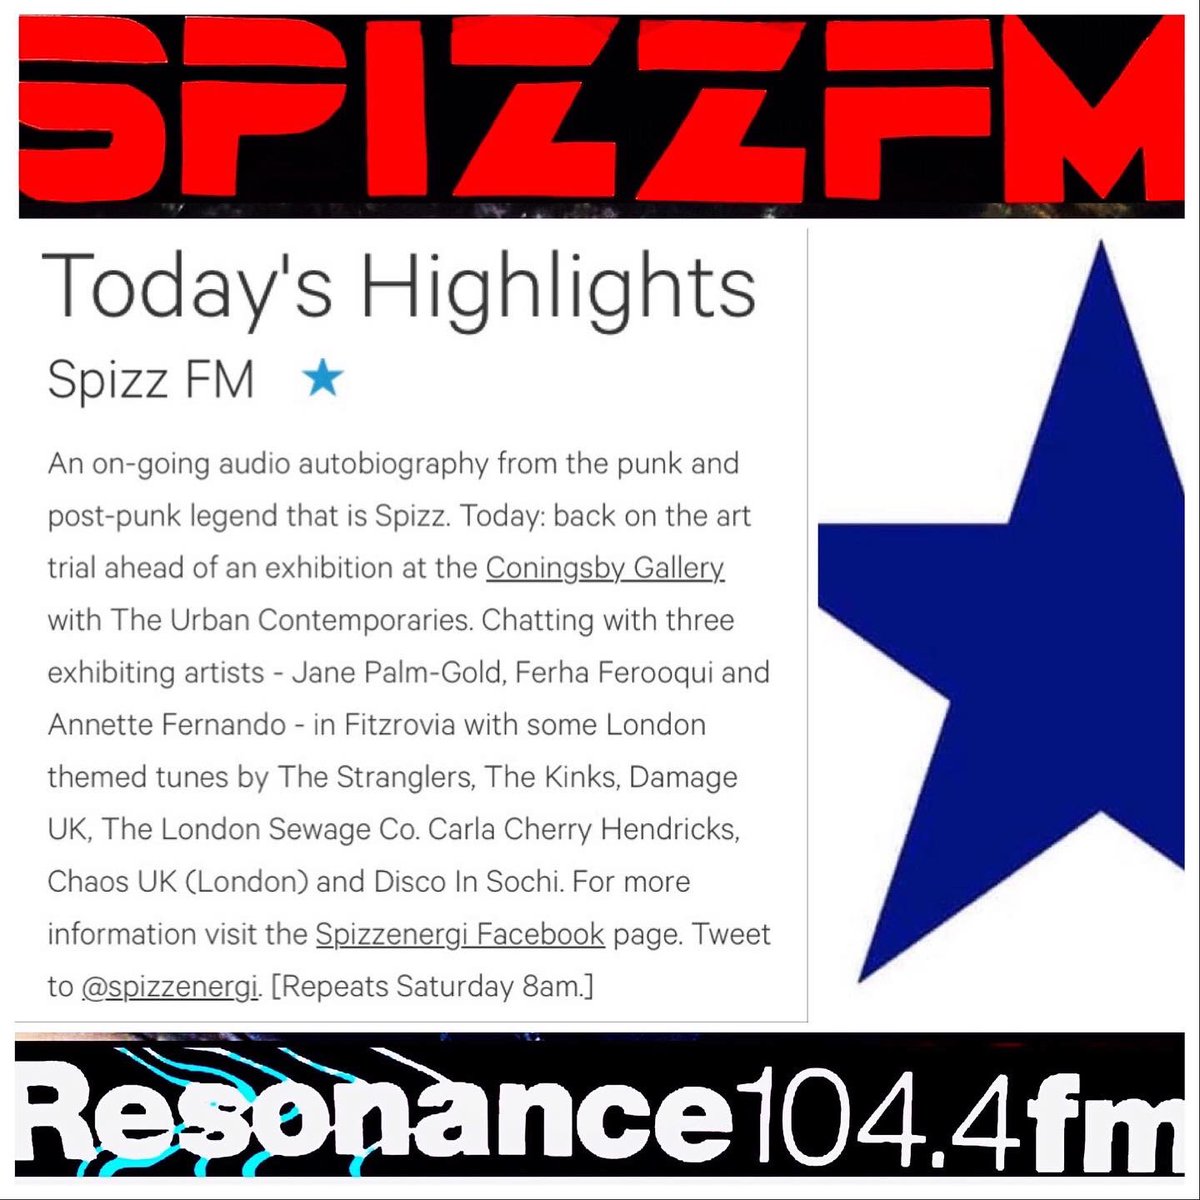 #SpizzFM Today 4:30pm on #Resonance 104.4fm & ResonanceFM.com #BlueStar Recommended listening @JanePalmGold1